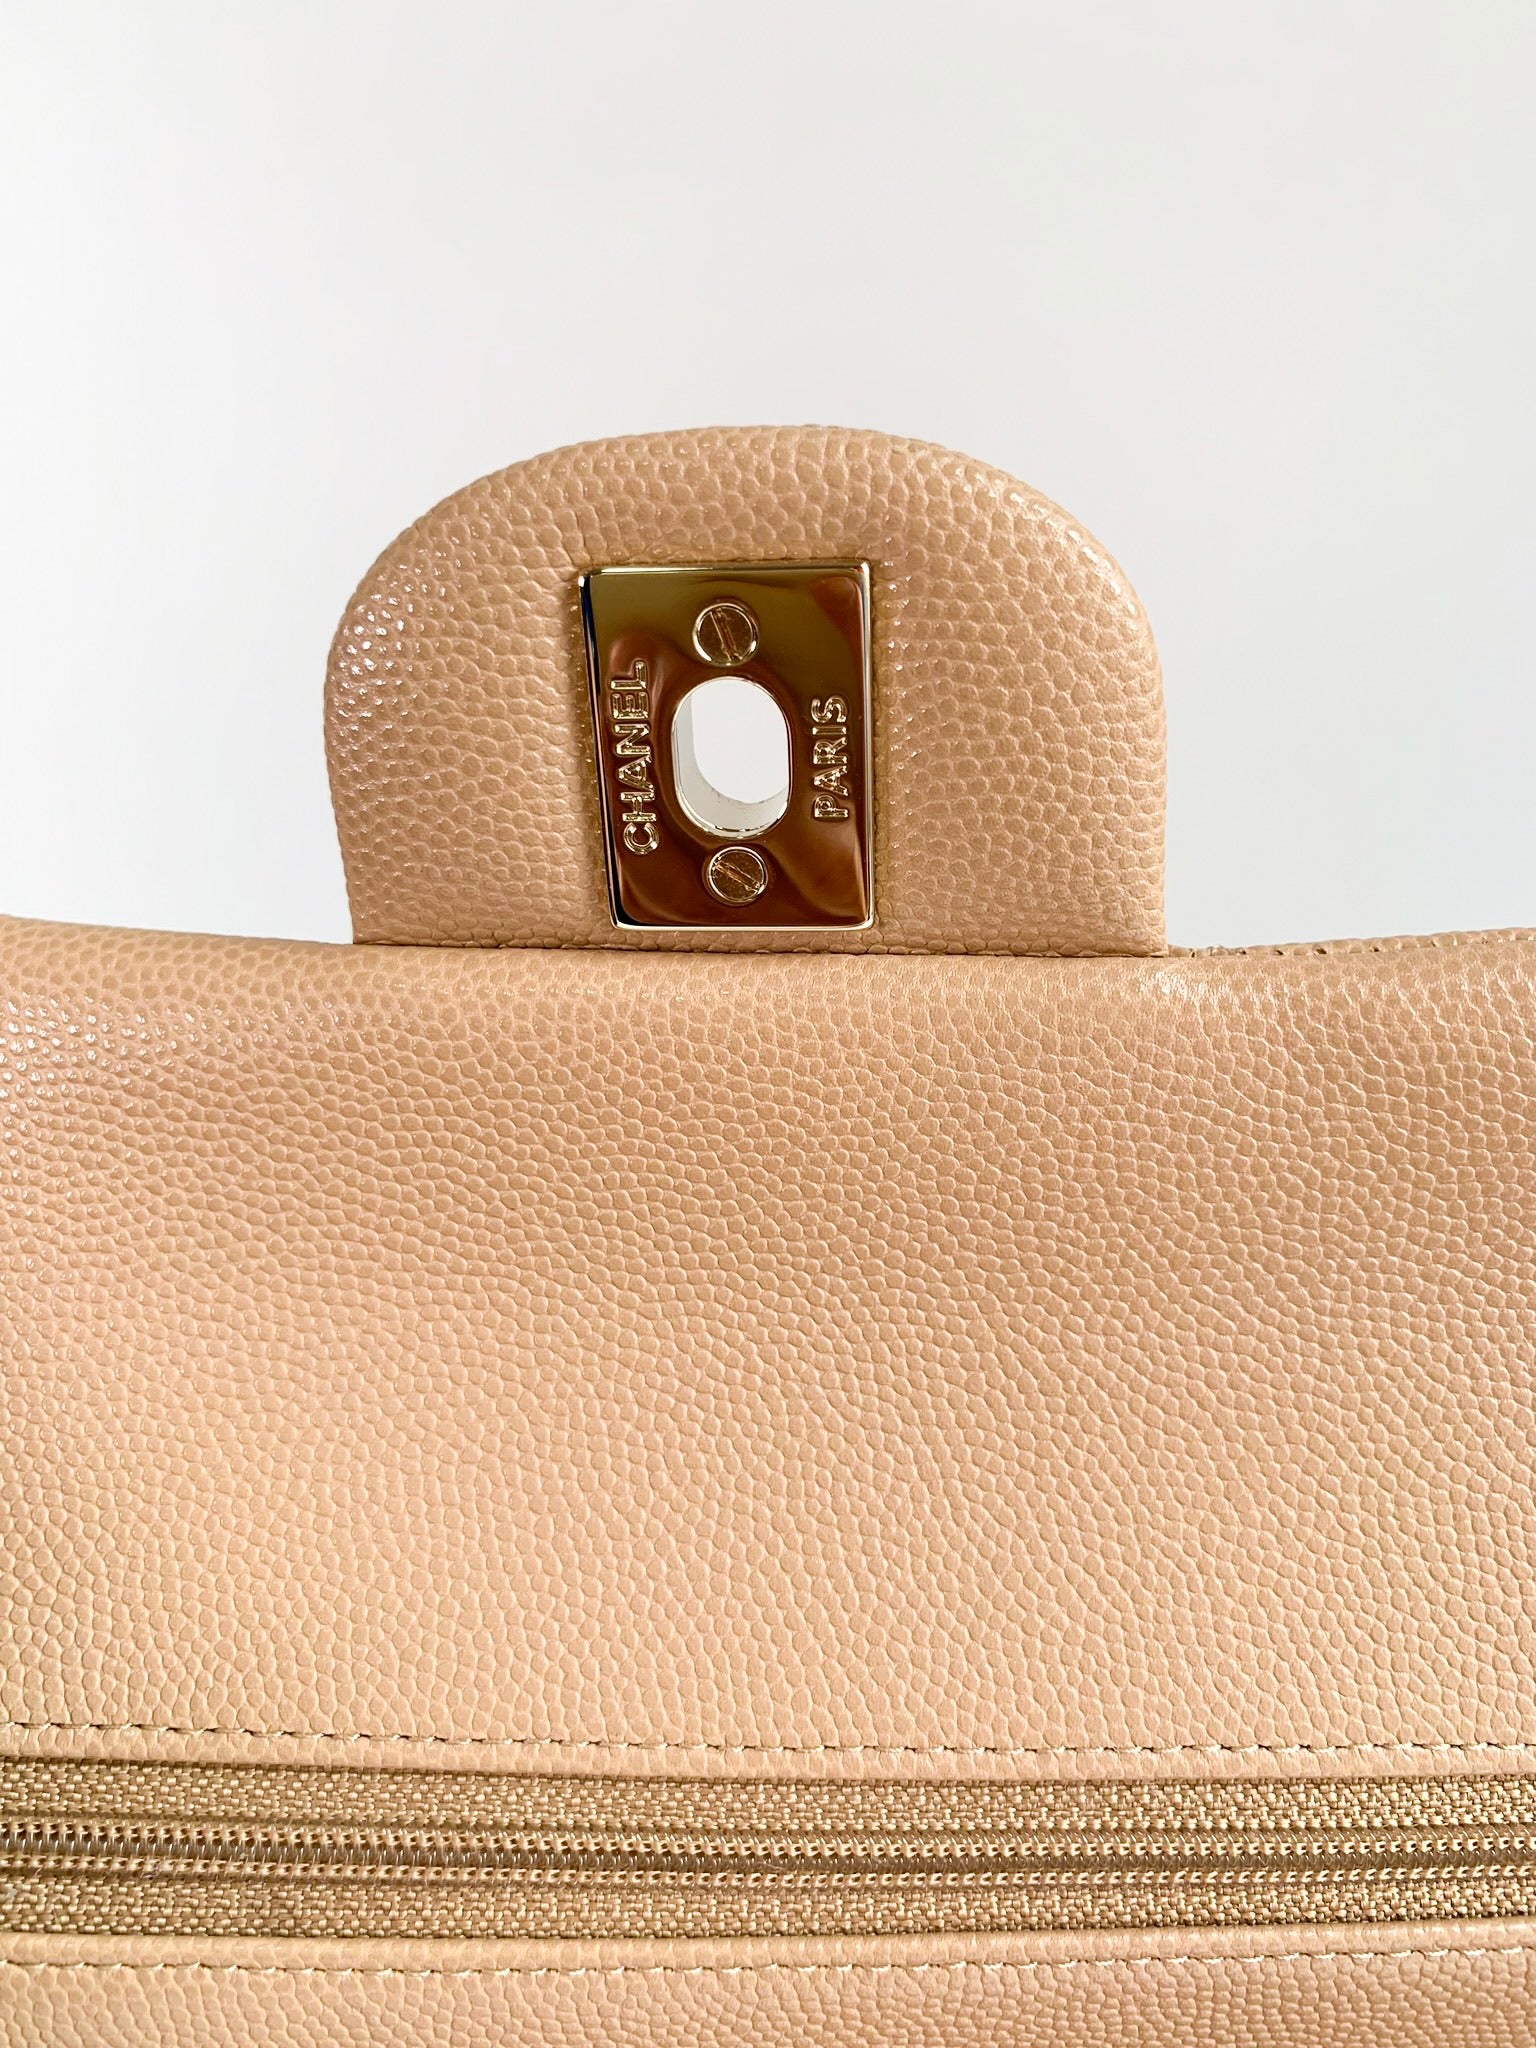 brown chanel purse